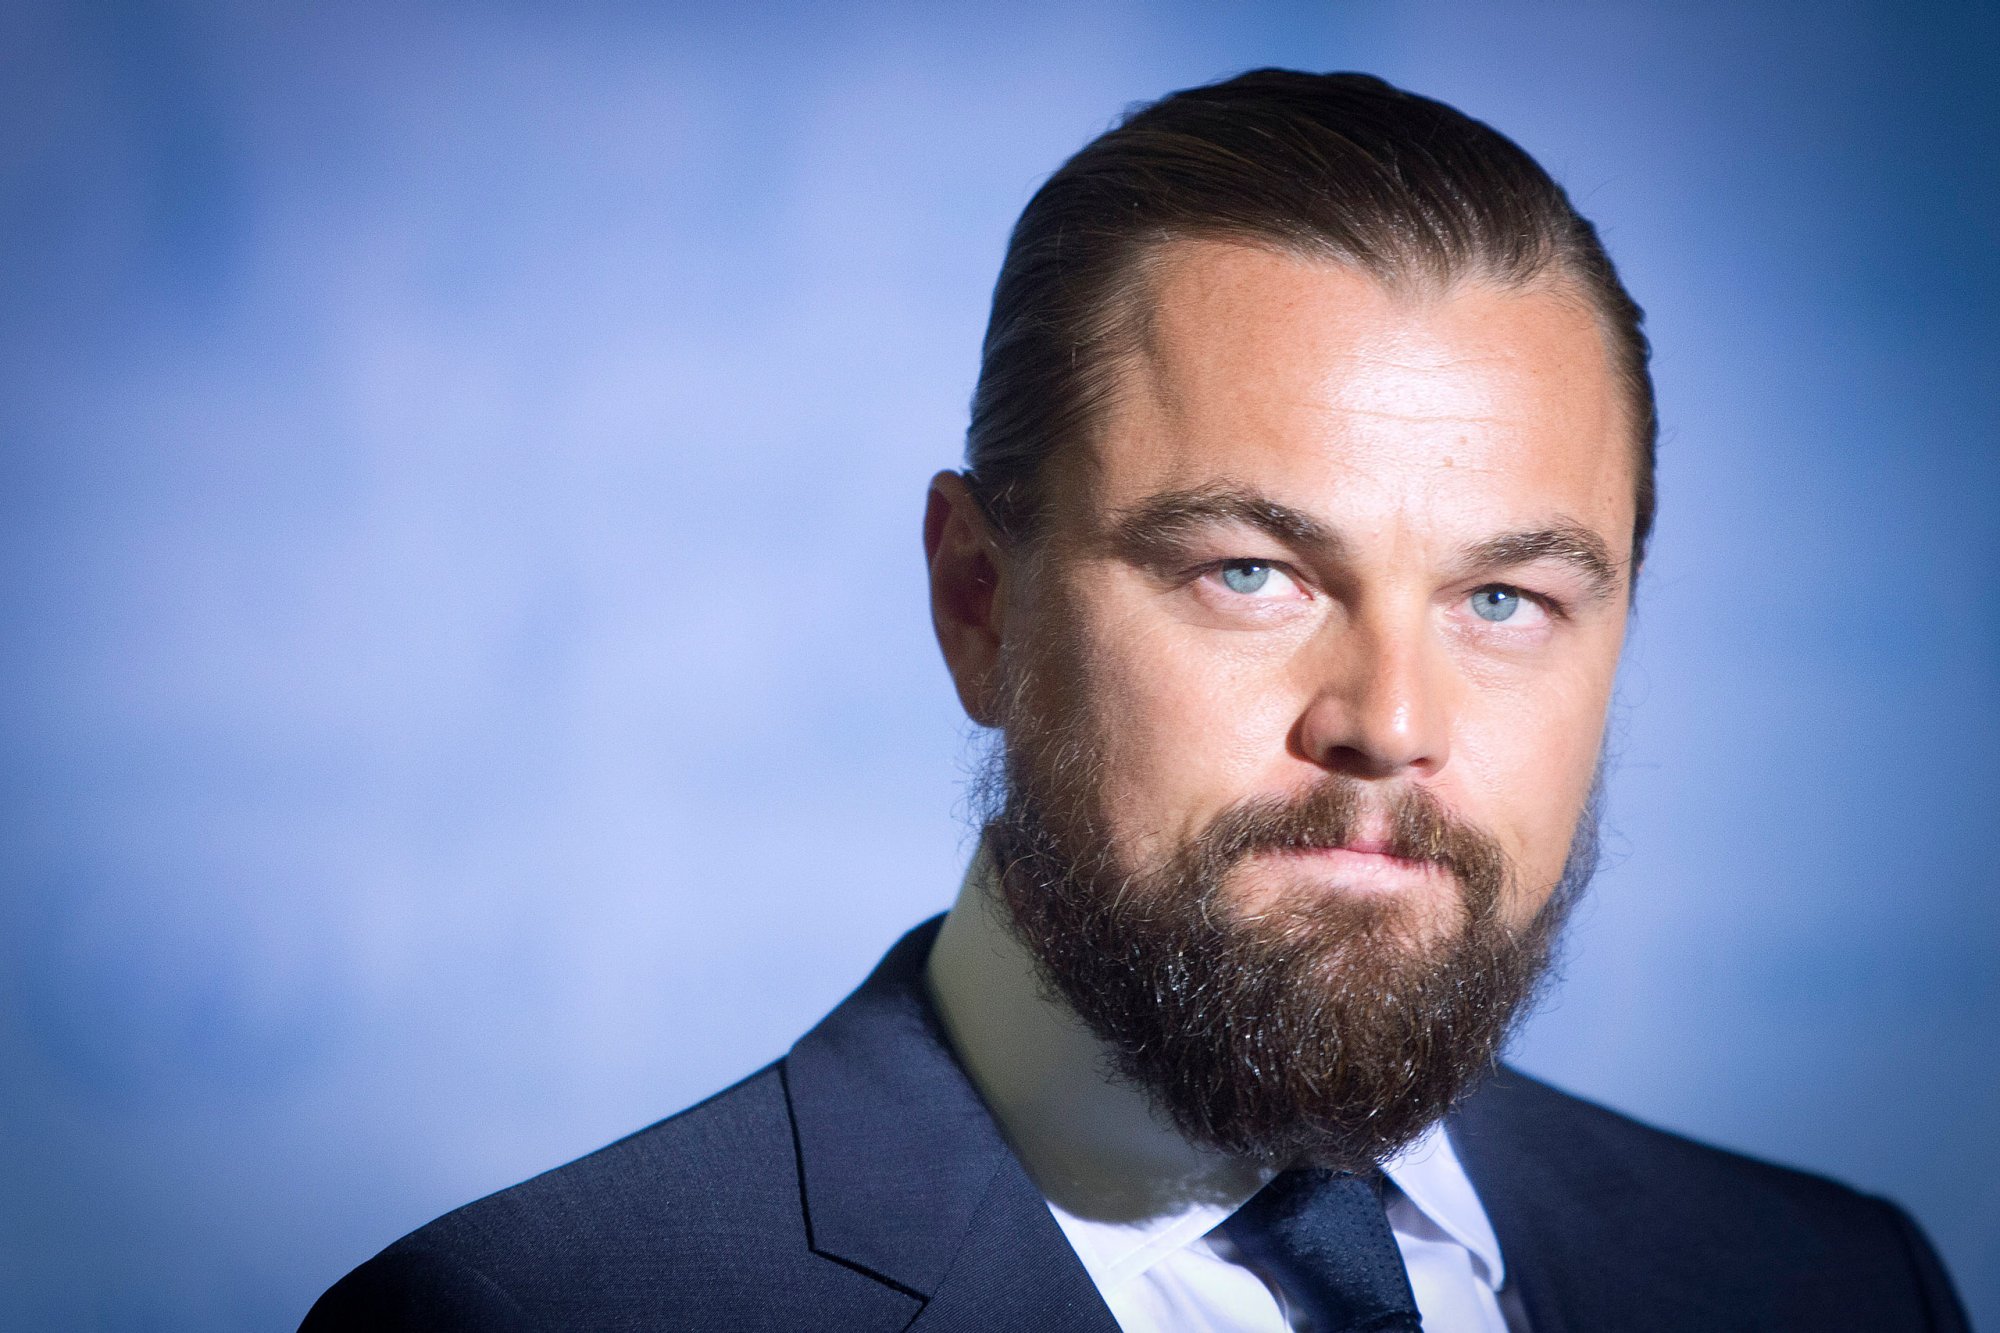 Leonardo DiCaprio accused of practicing hypocrisy